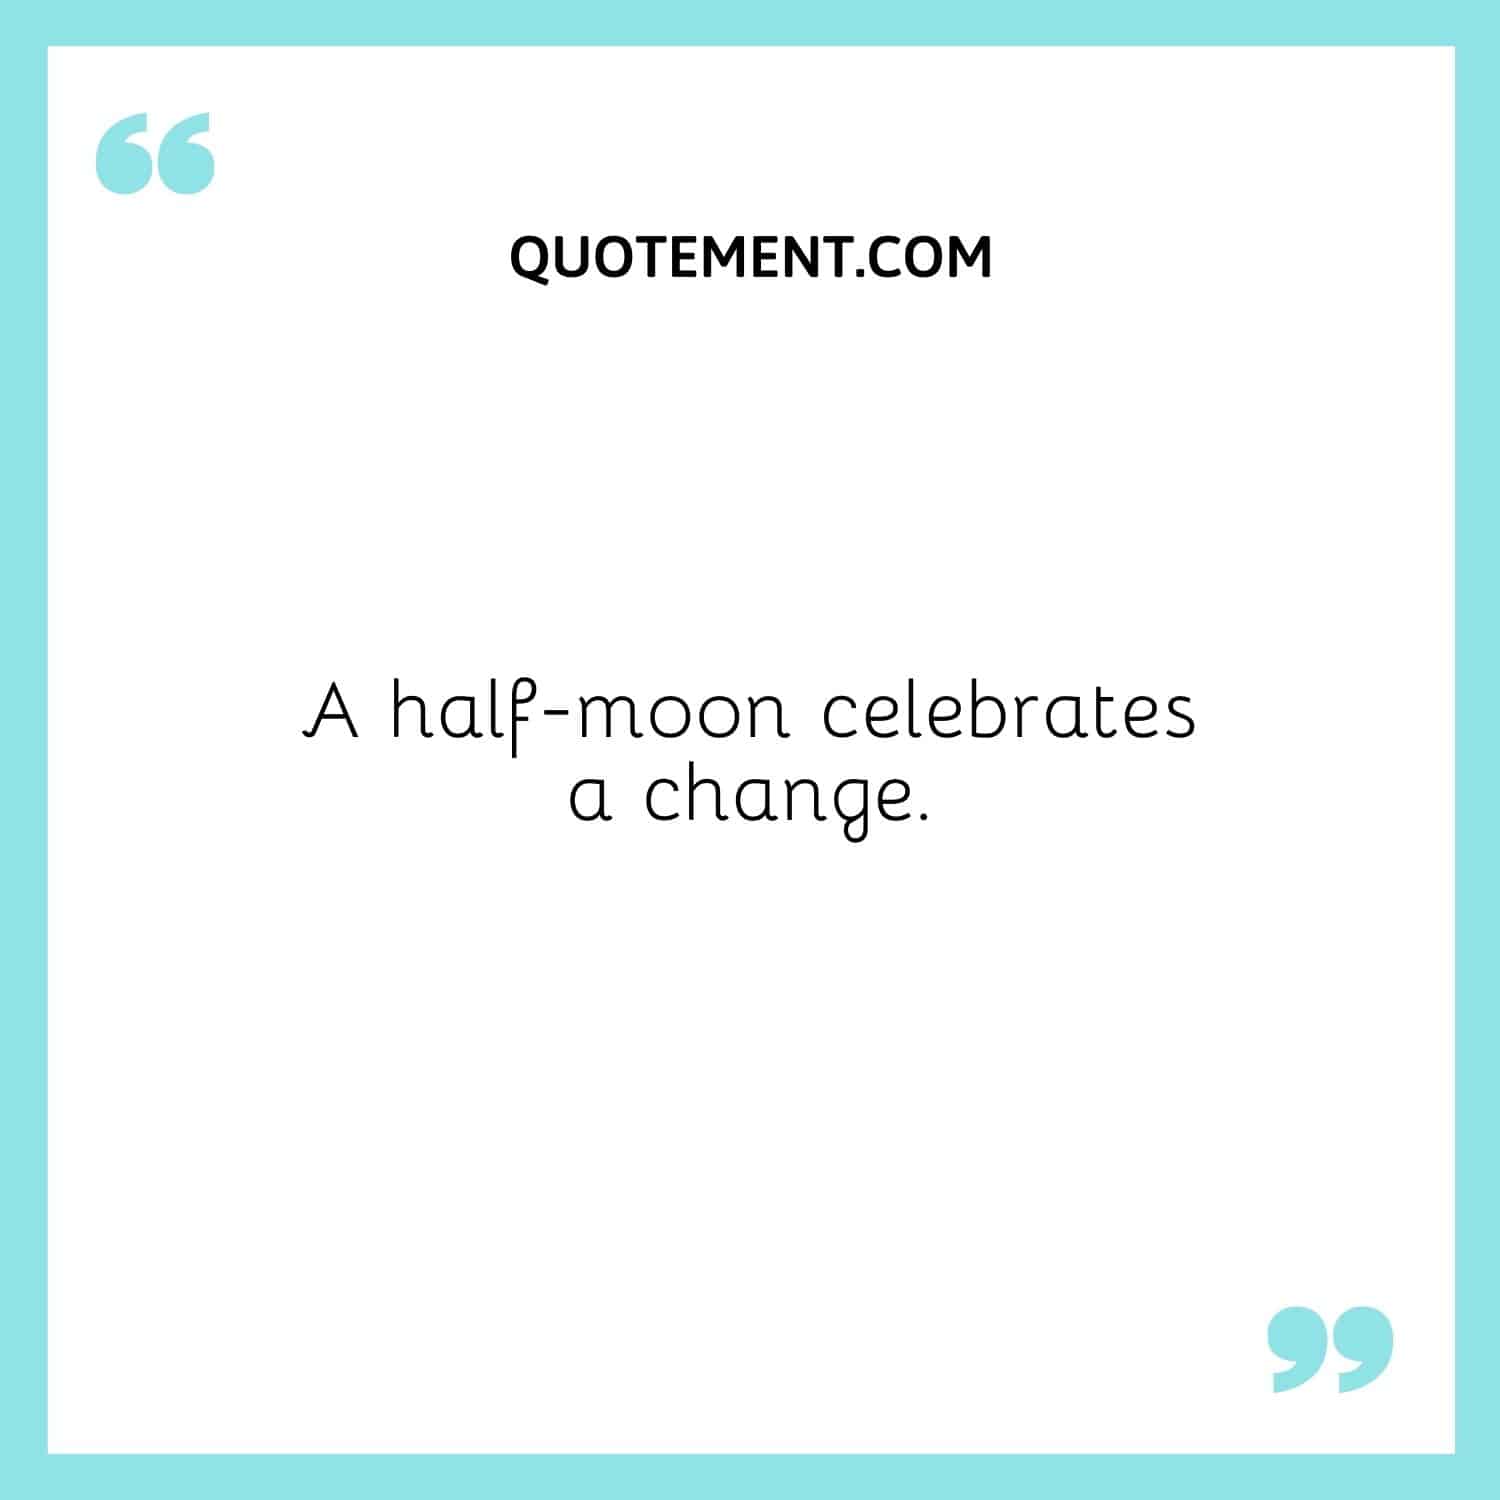 A half-moon celebrates a change.